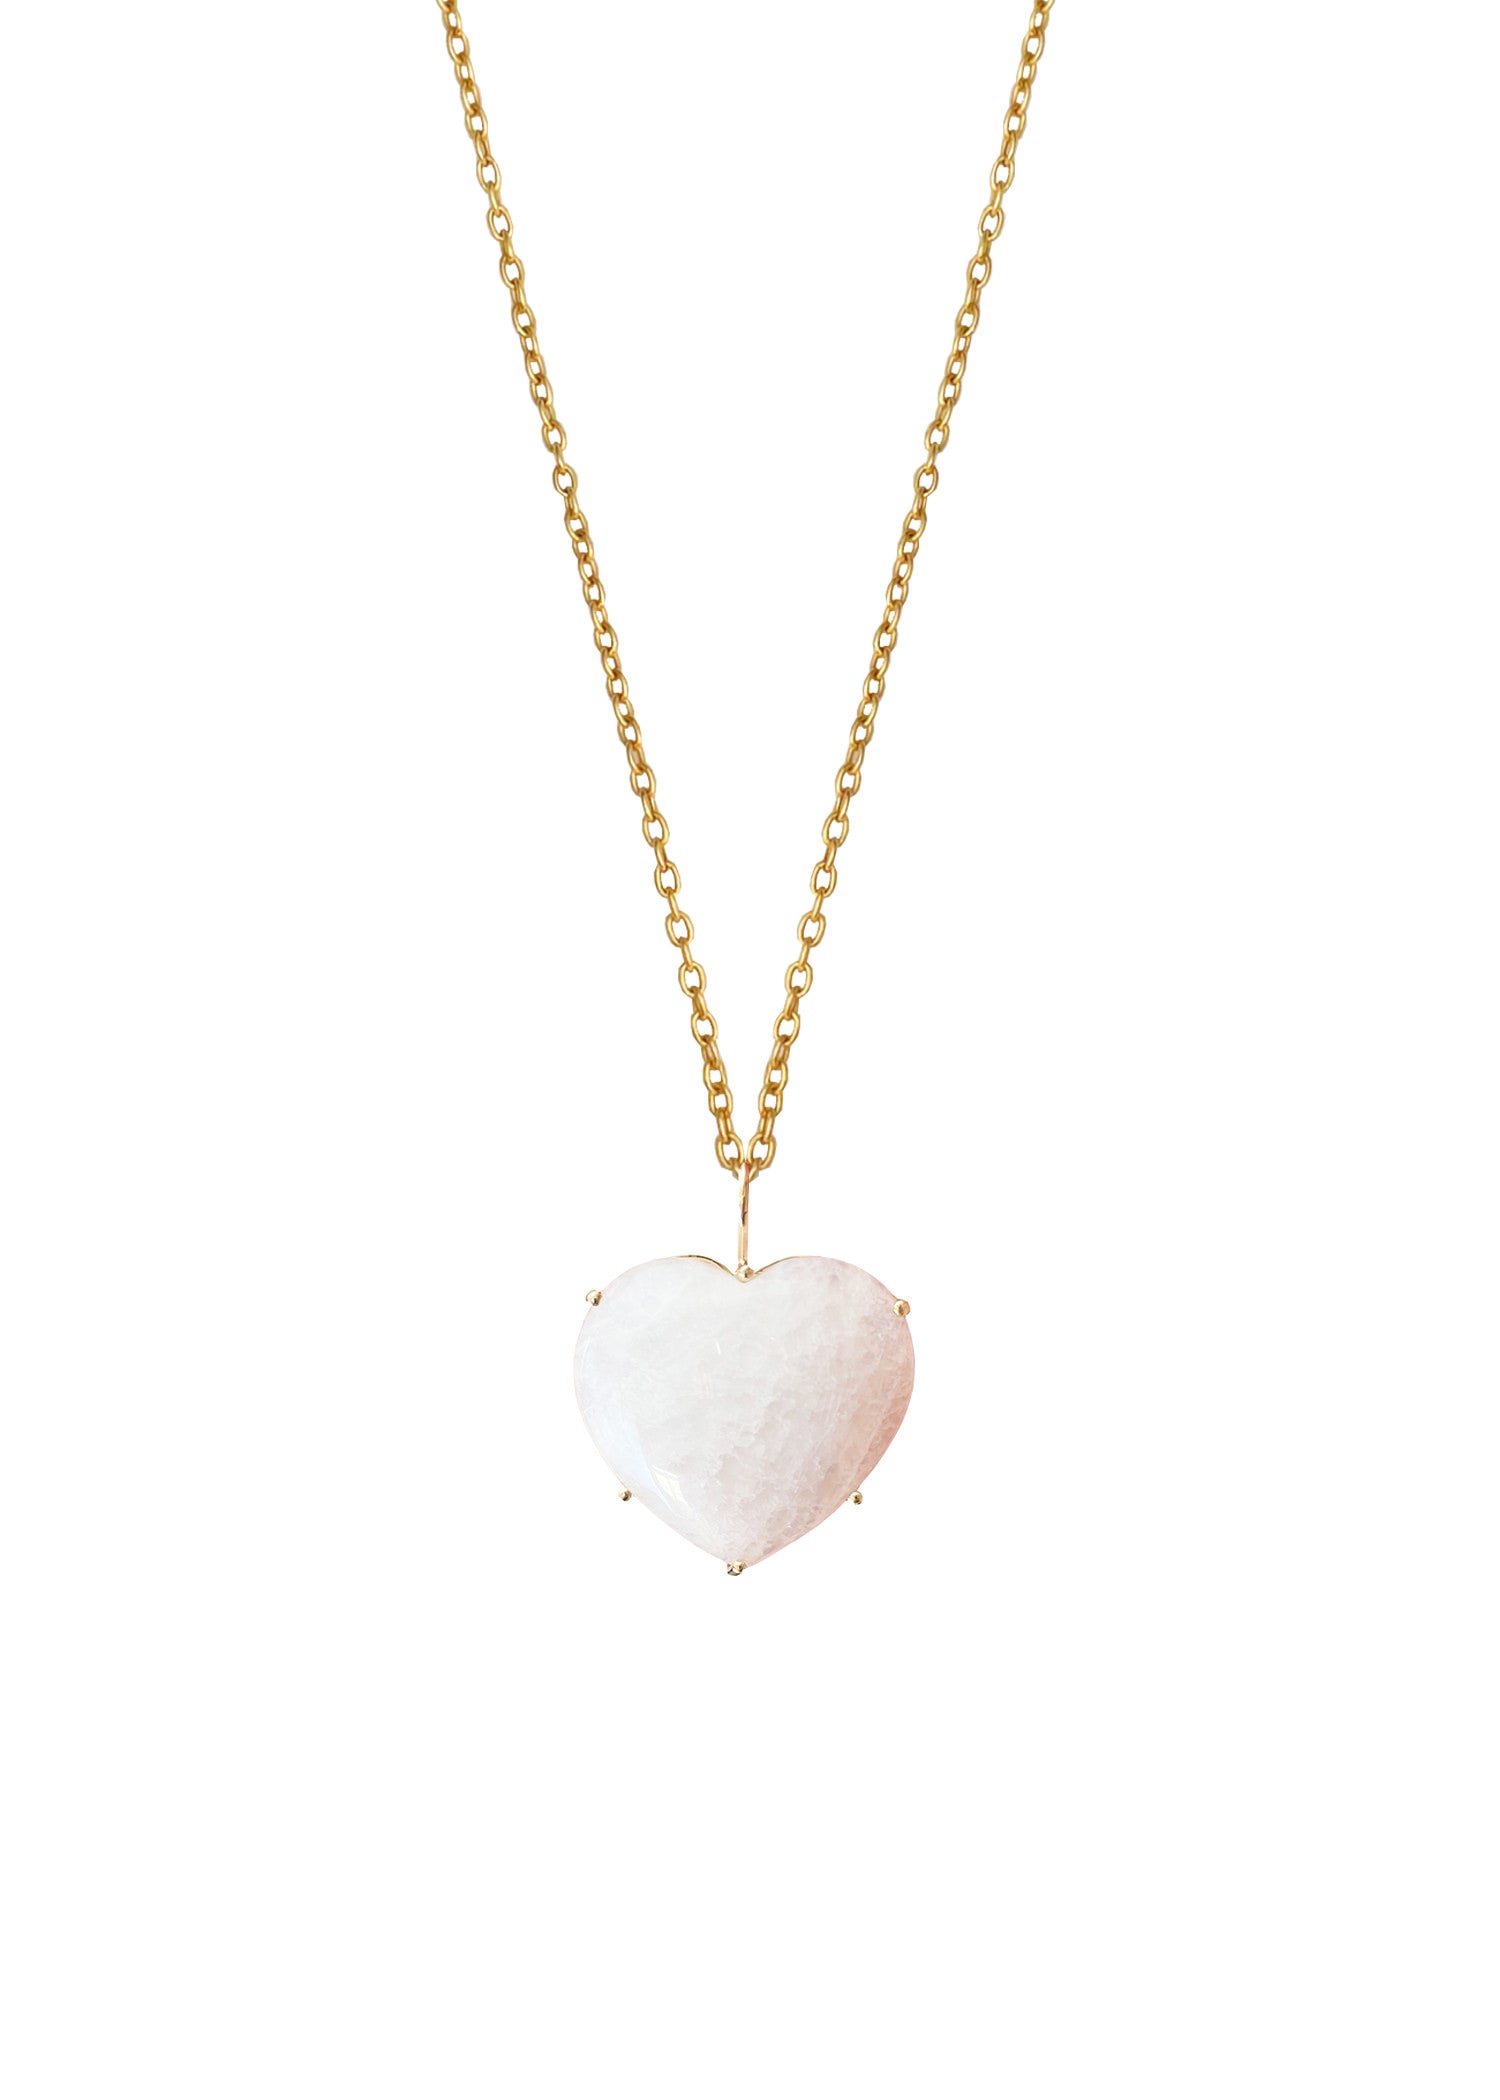 Vintage Big Heart Pendant Necklace Hollow Large Flower Statement Boho  Jewelry | eBay